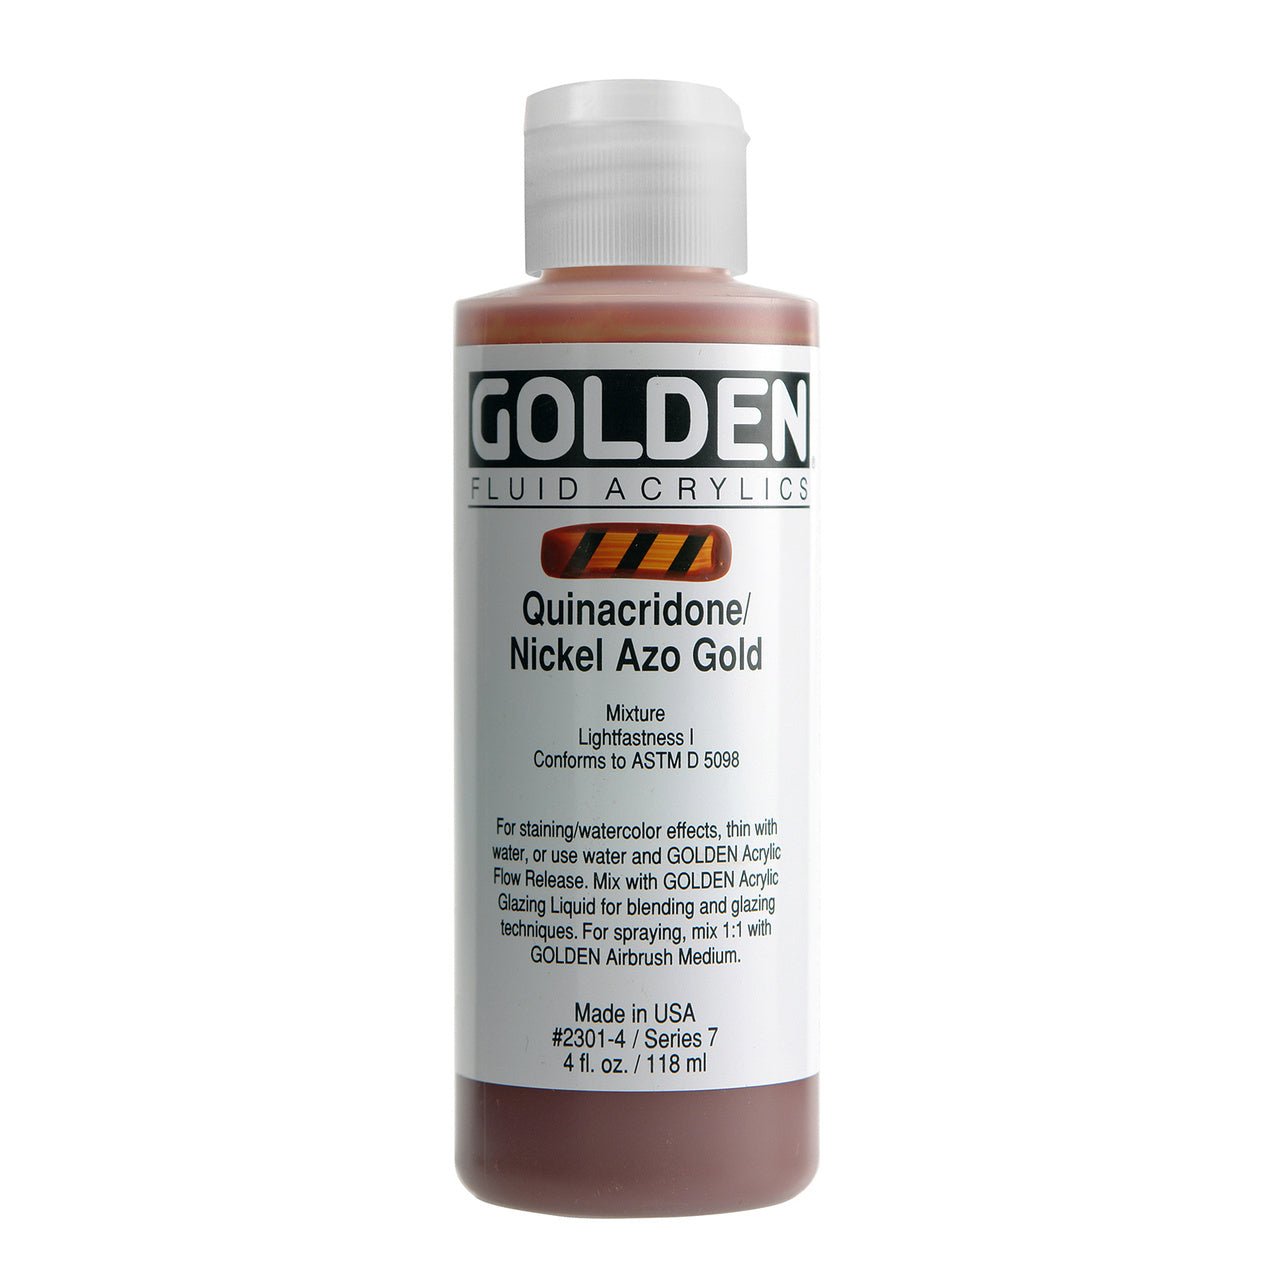 Golden Fluid Acrylic Quinacridone Nickel Azo Gold 4 oz - merriartist.com